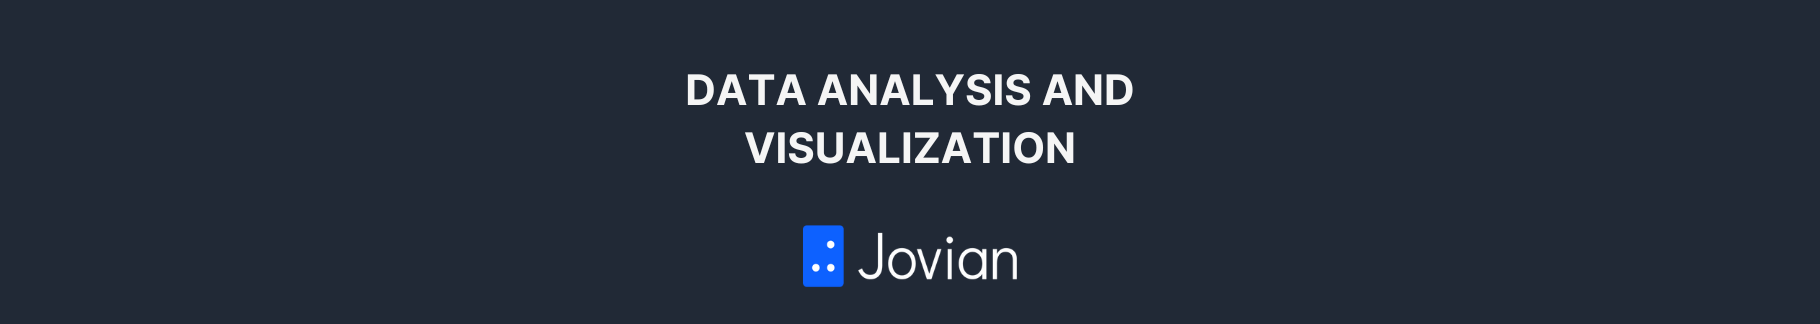 Data Analysis and Visualization with Python